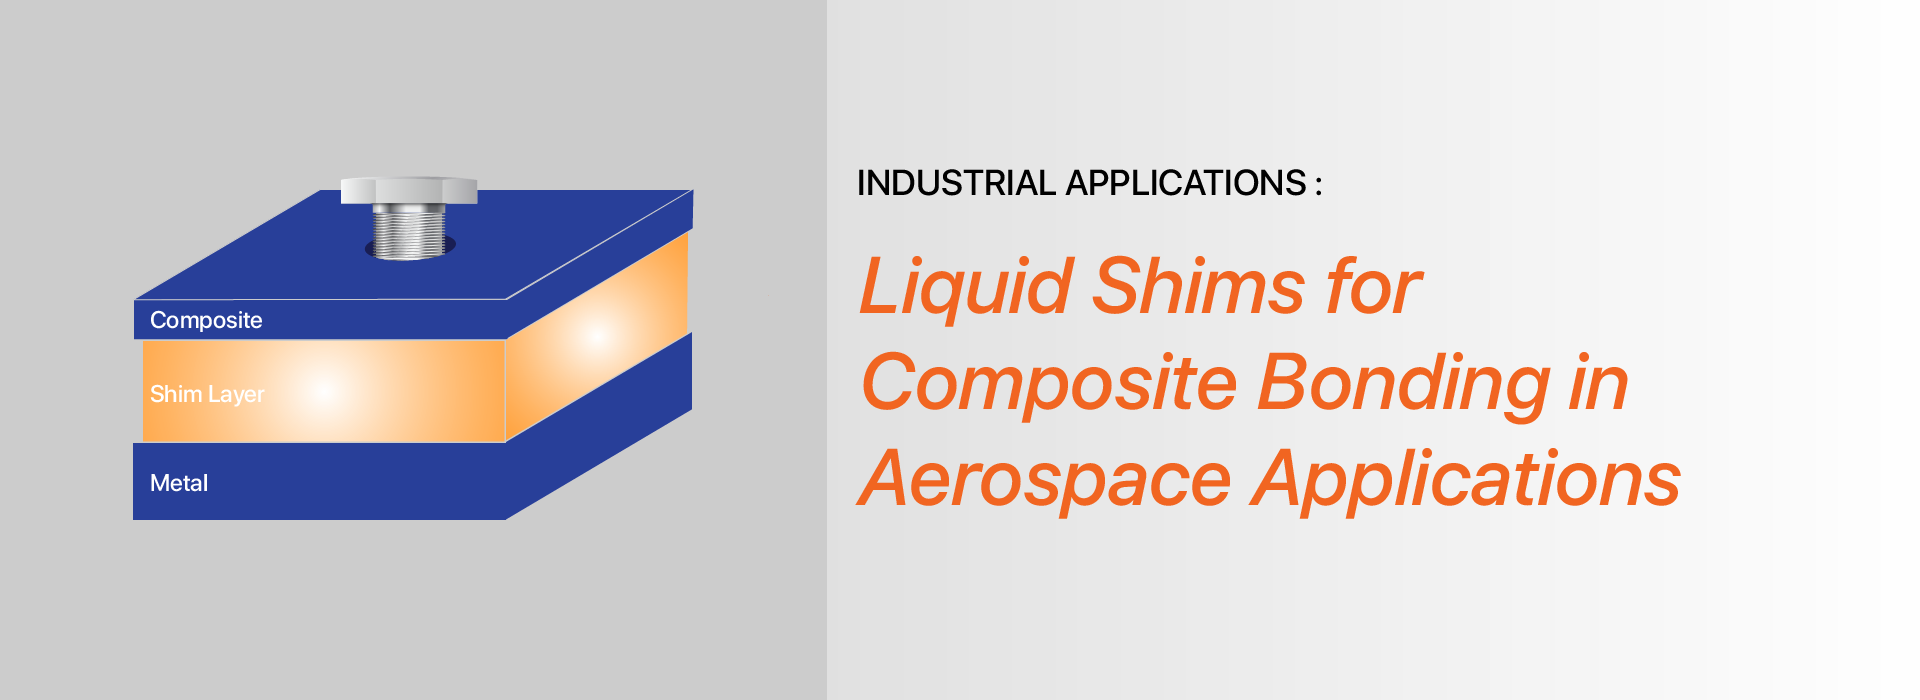 Liquid Shims for Composite Bonding in Aerospace Applications